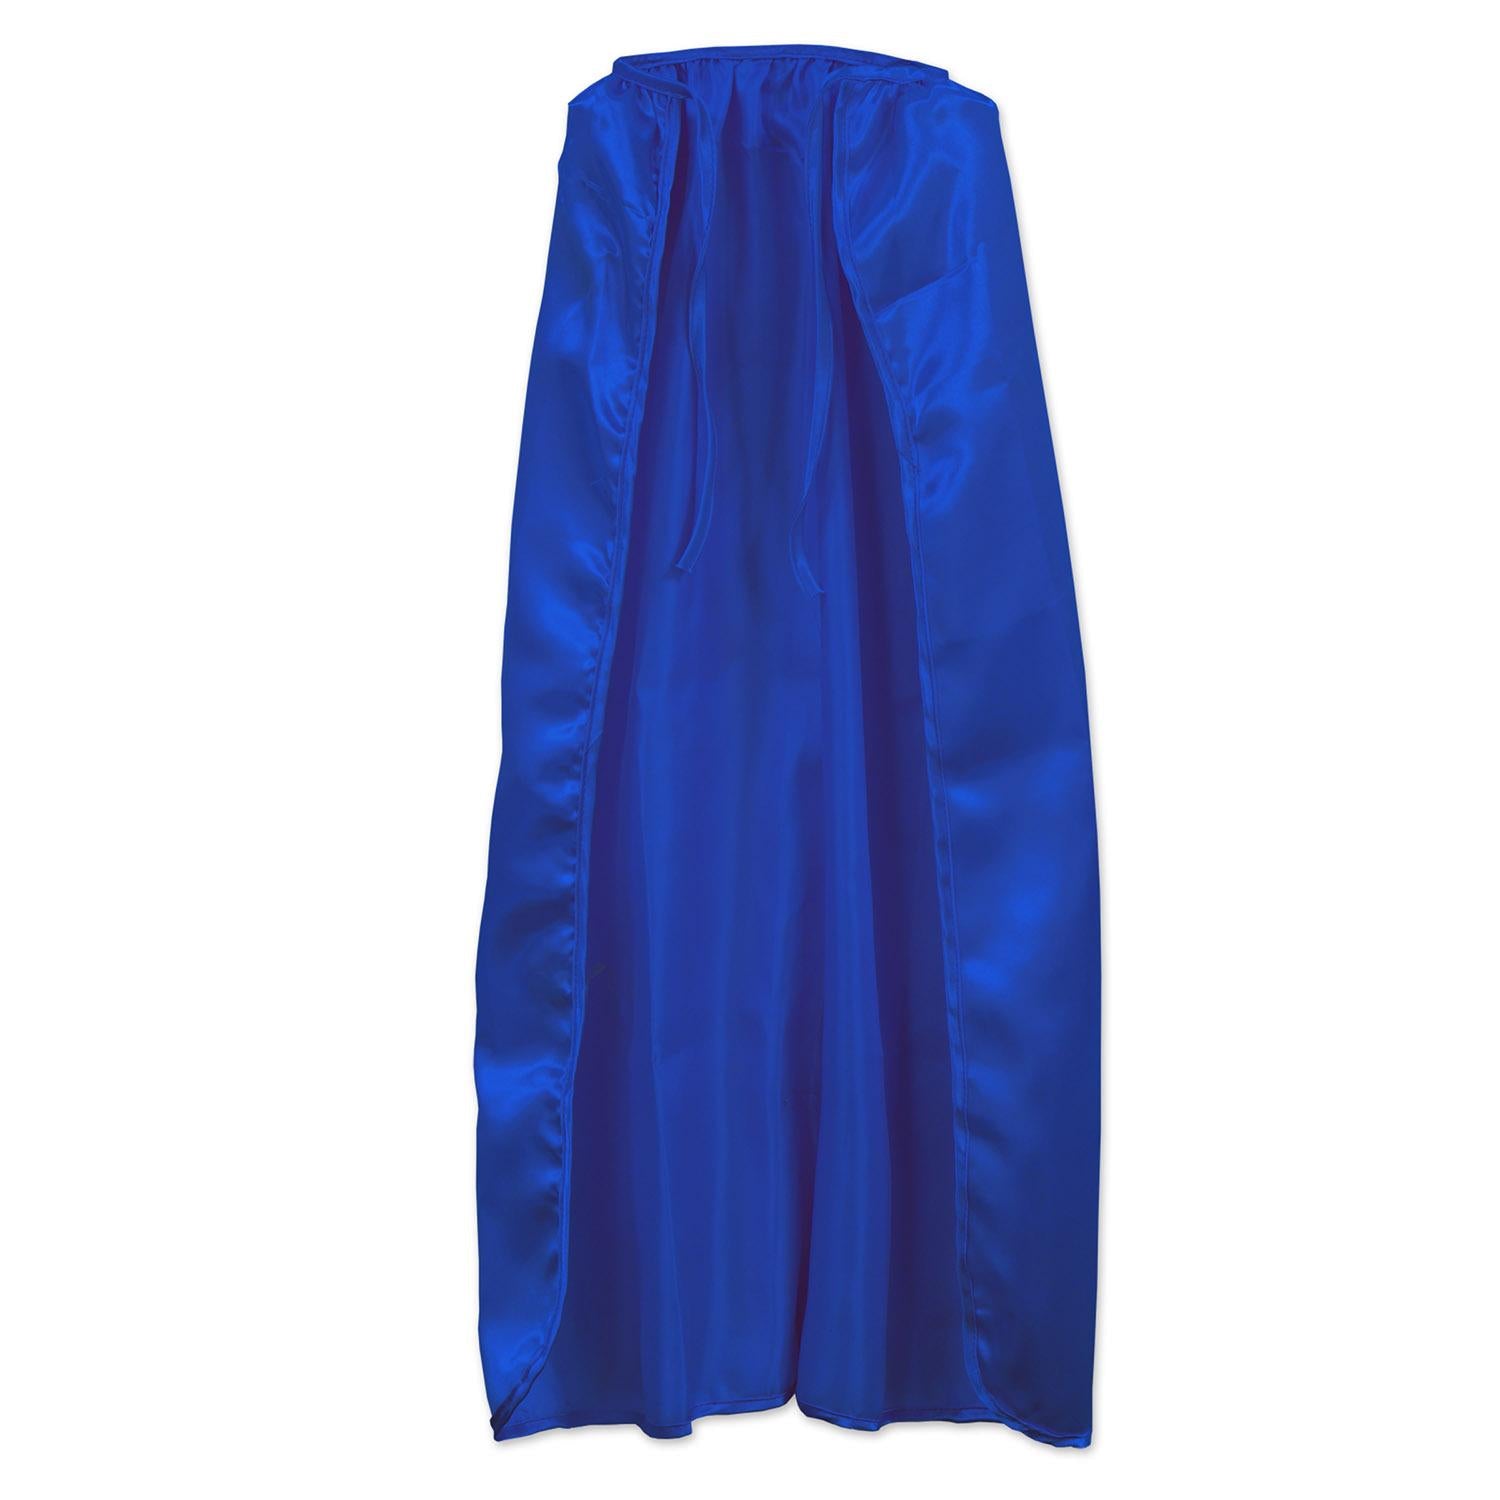 Beistle Fabric Cape - blue - string-tie closure